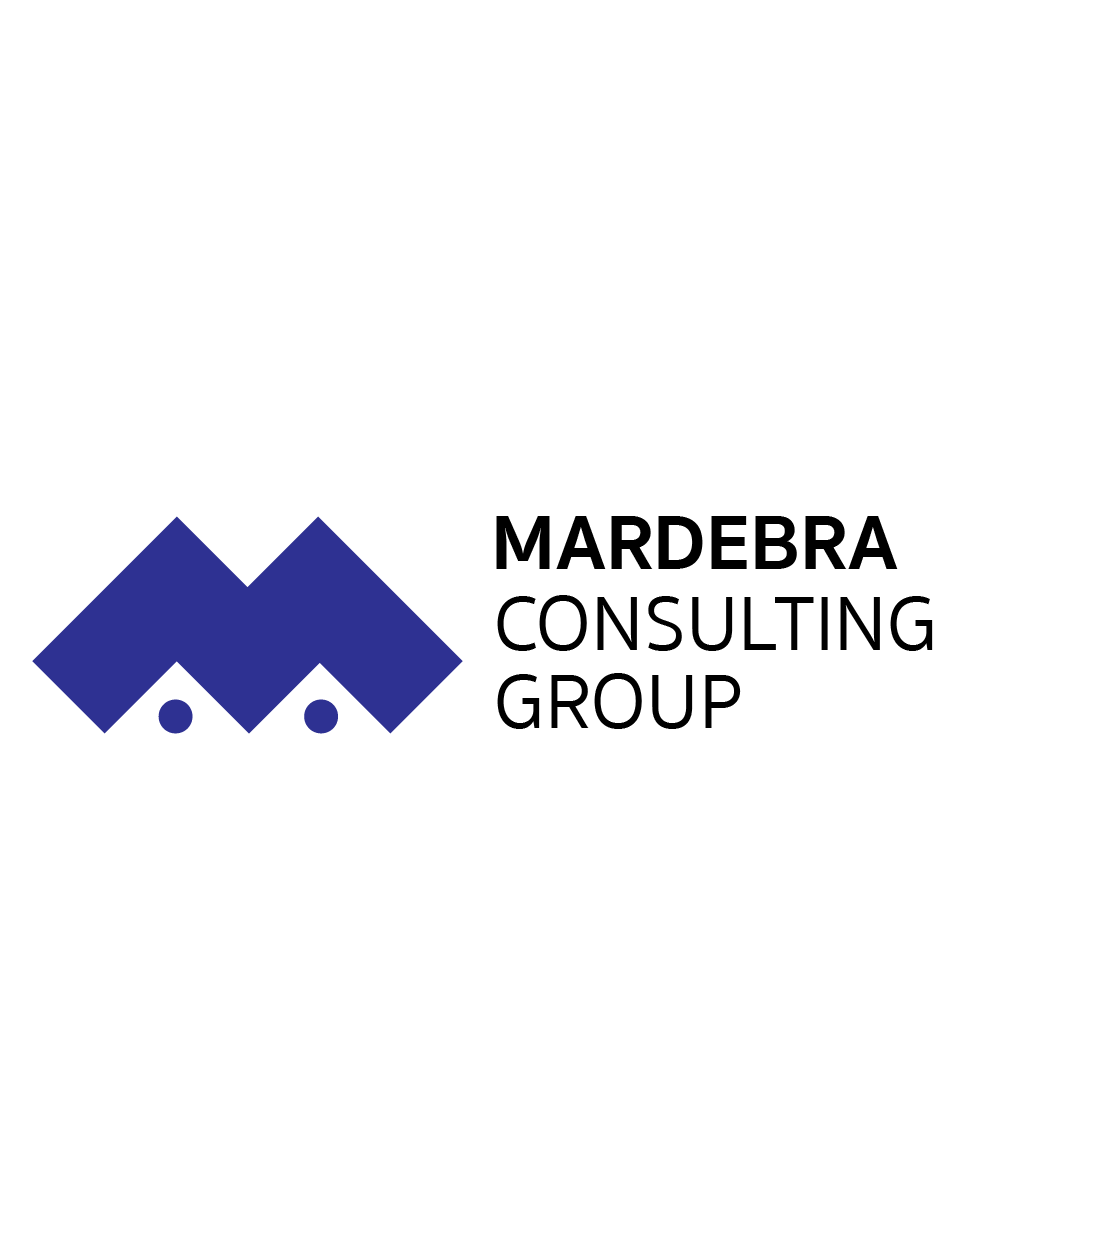 Mardebra Consulting Group